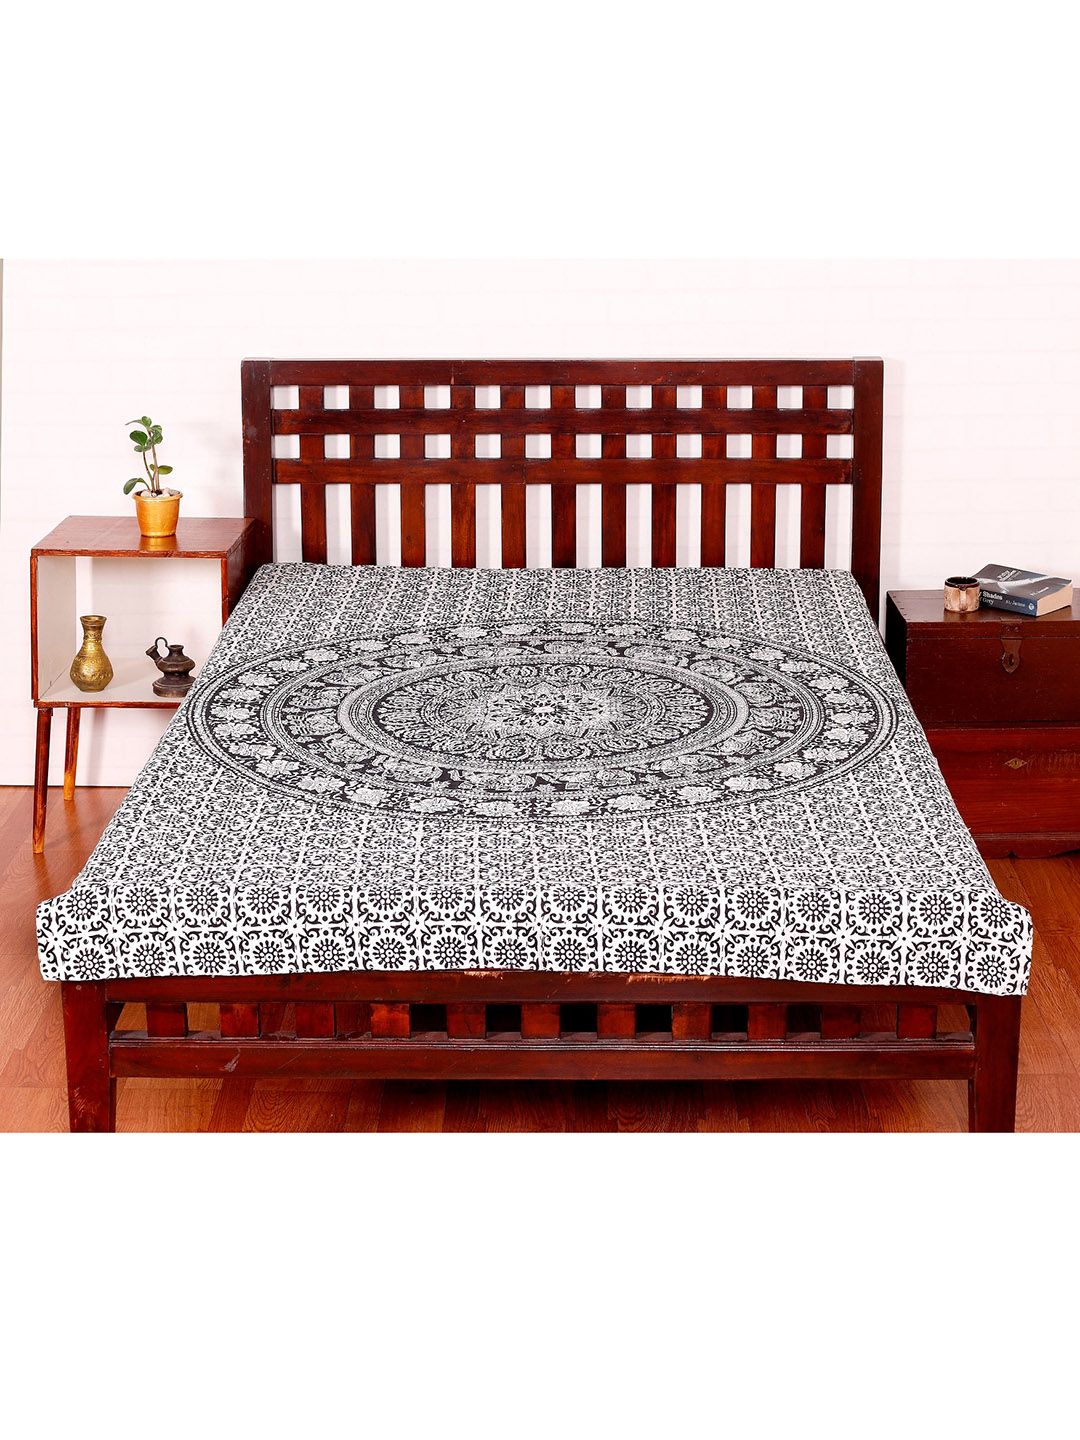 HANDICRAFT PALACE Black Elephant Mandala Kantha Cotton Reversible Single Bed Cover Price in India